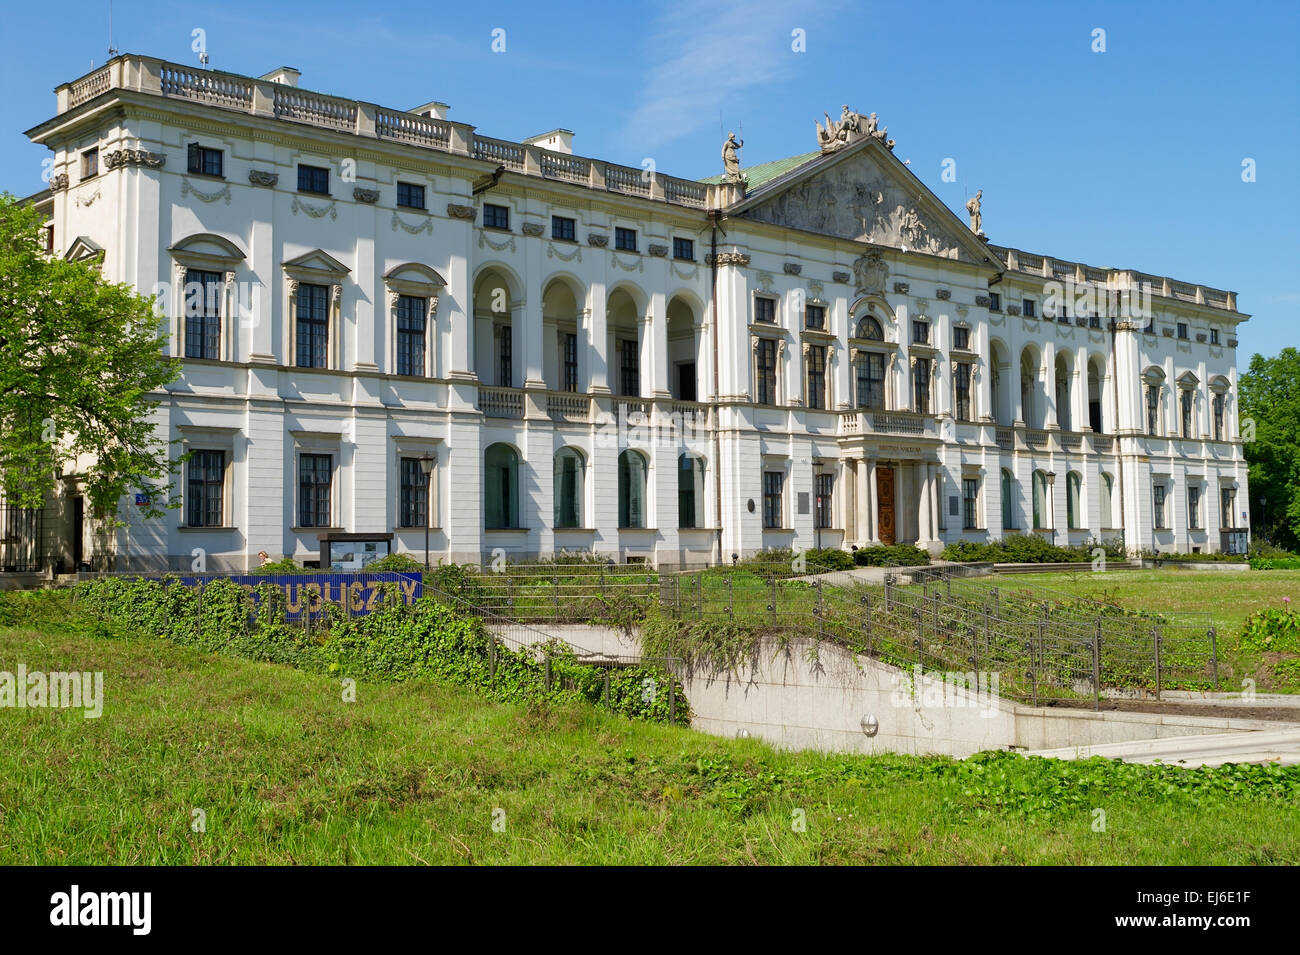 The Krasinski Palace in Warsaw, Poland. Stock Photo